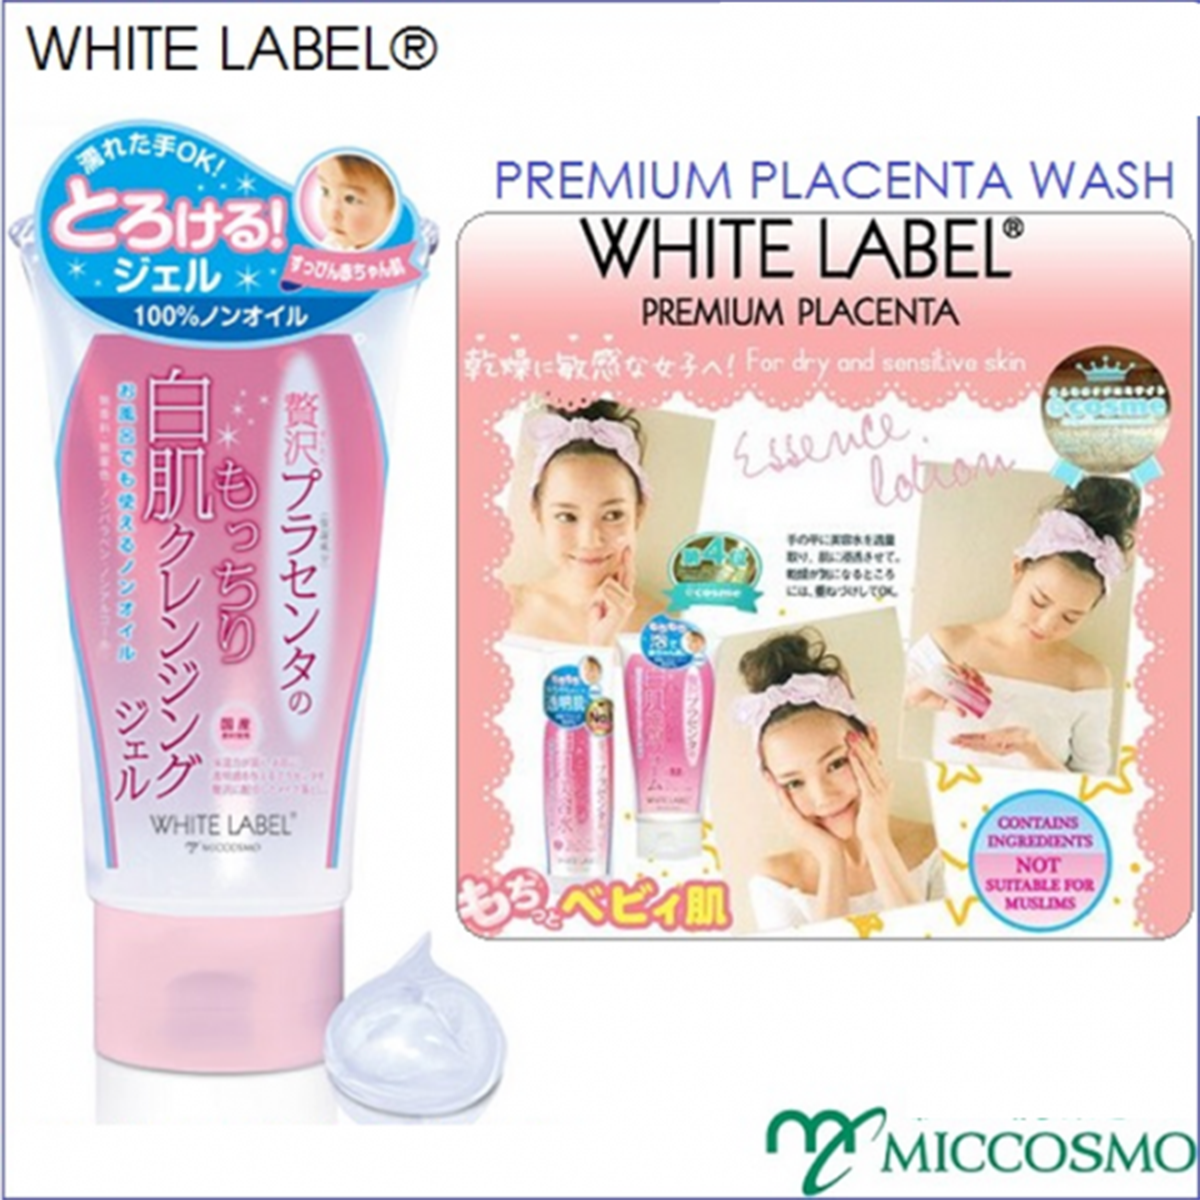 46caa5da whitelabel whitelabelpremiumplacentawash foam others2.png - Sữa rửa mặt trắng da White Label Premium Placenta Wash 110g